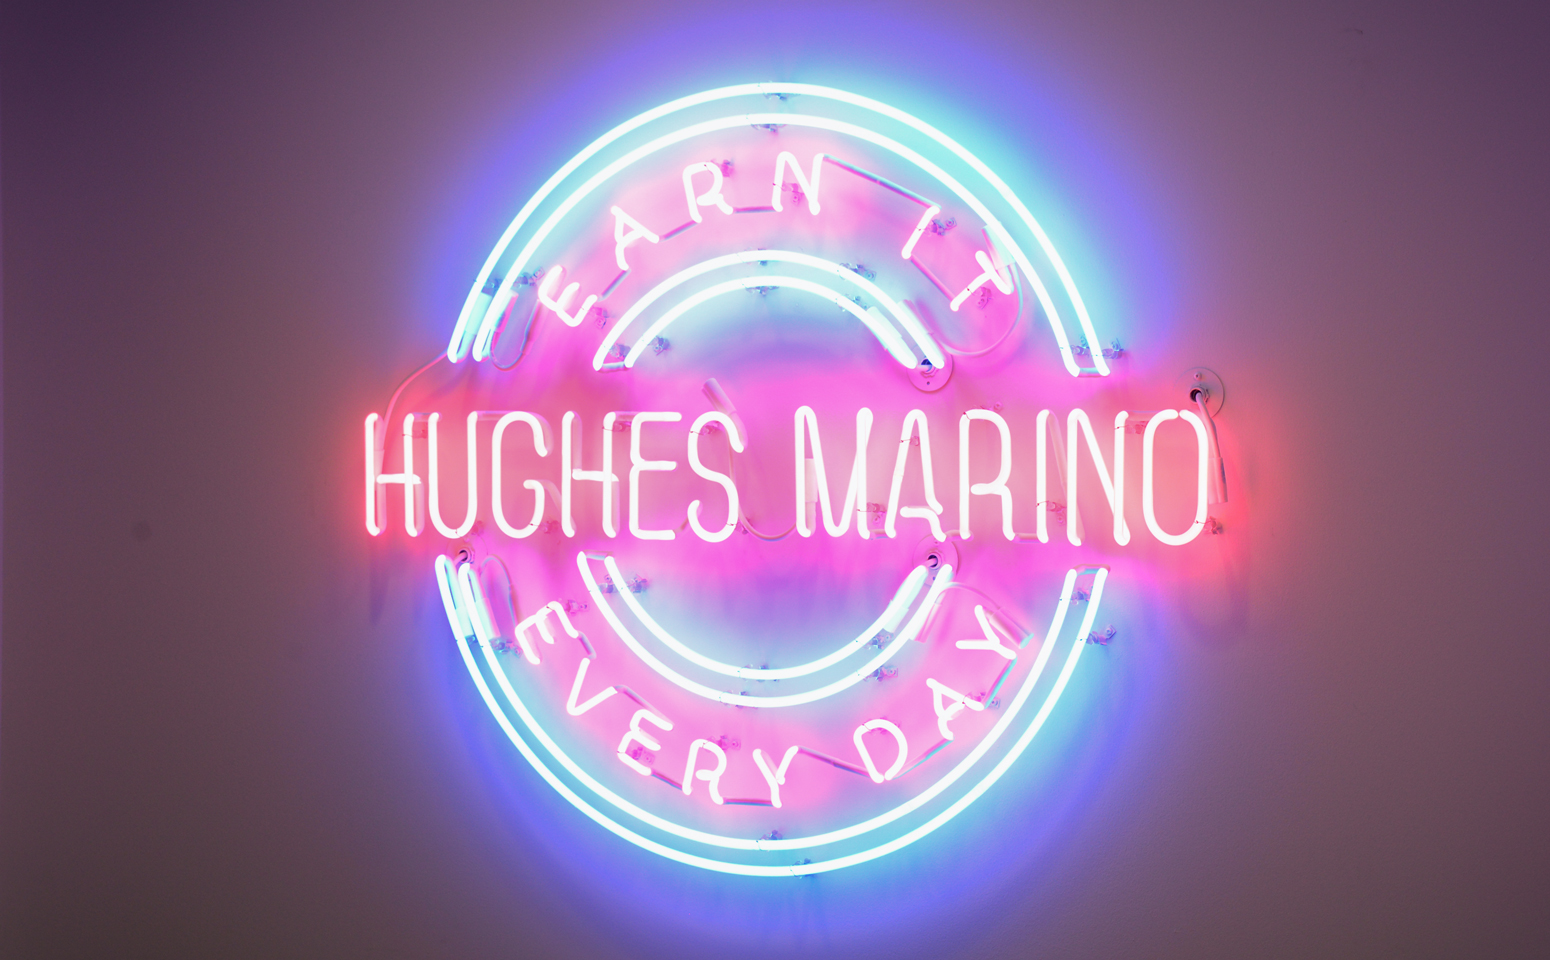 Hughes Marino orange county neon sign